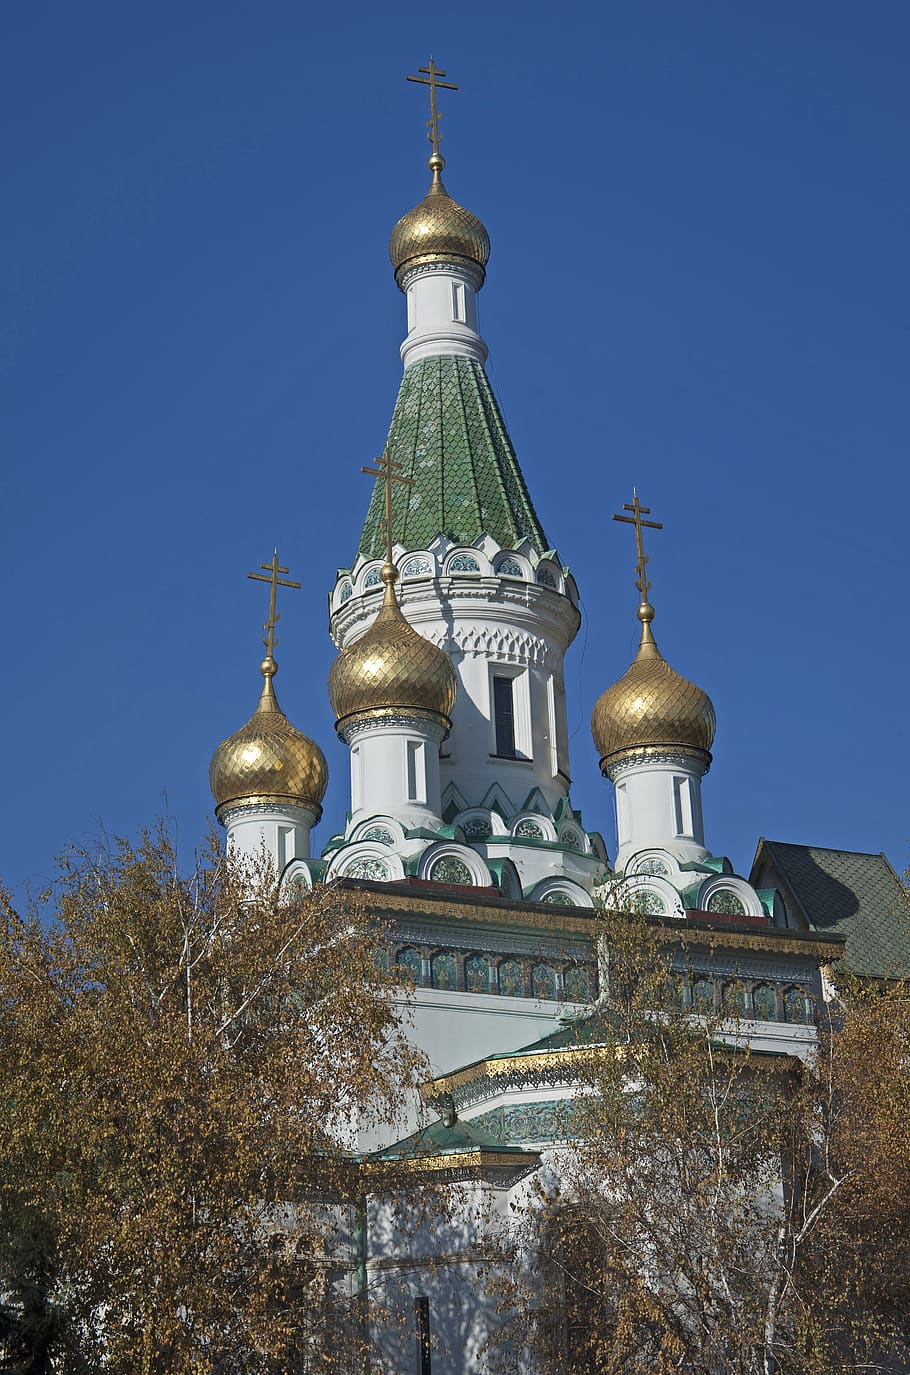 russian church, sofia, bulgaria, onion domes, blue sky, winter, gold domes, crosses, religious, balkans